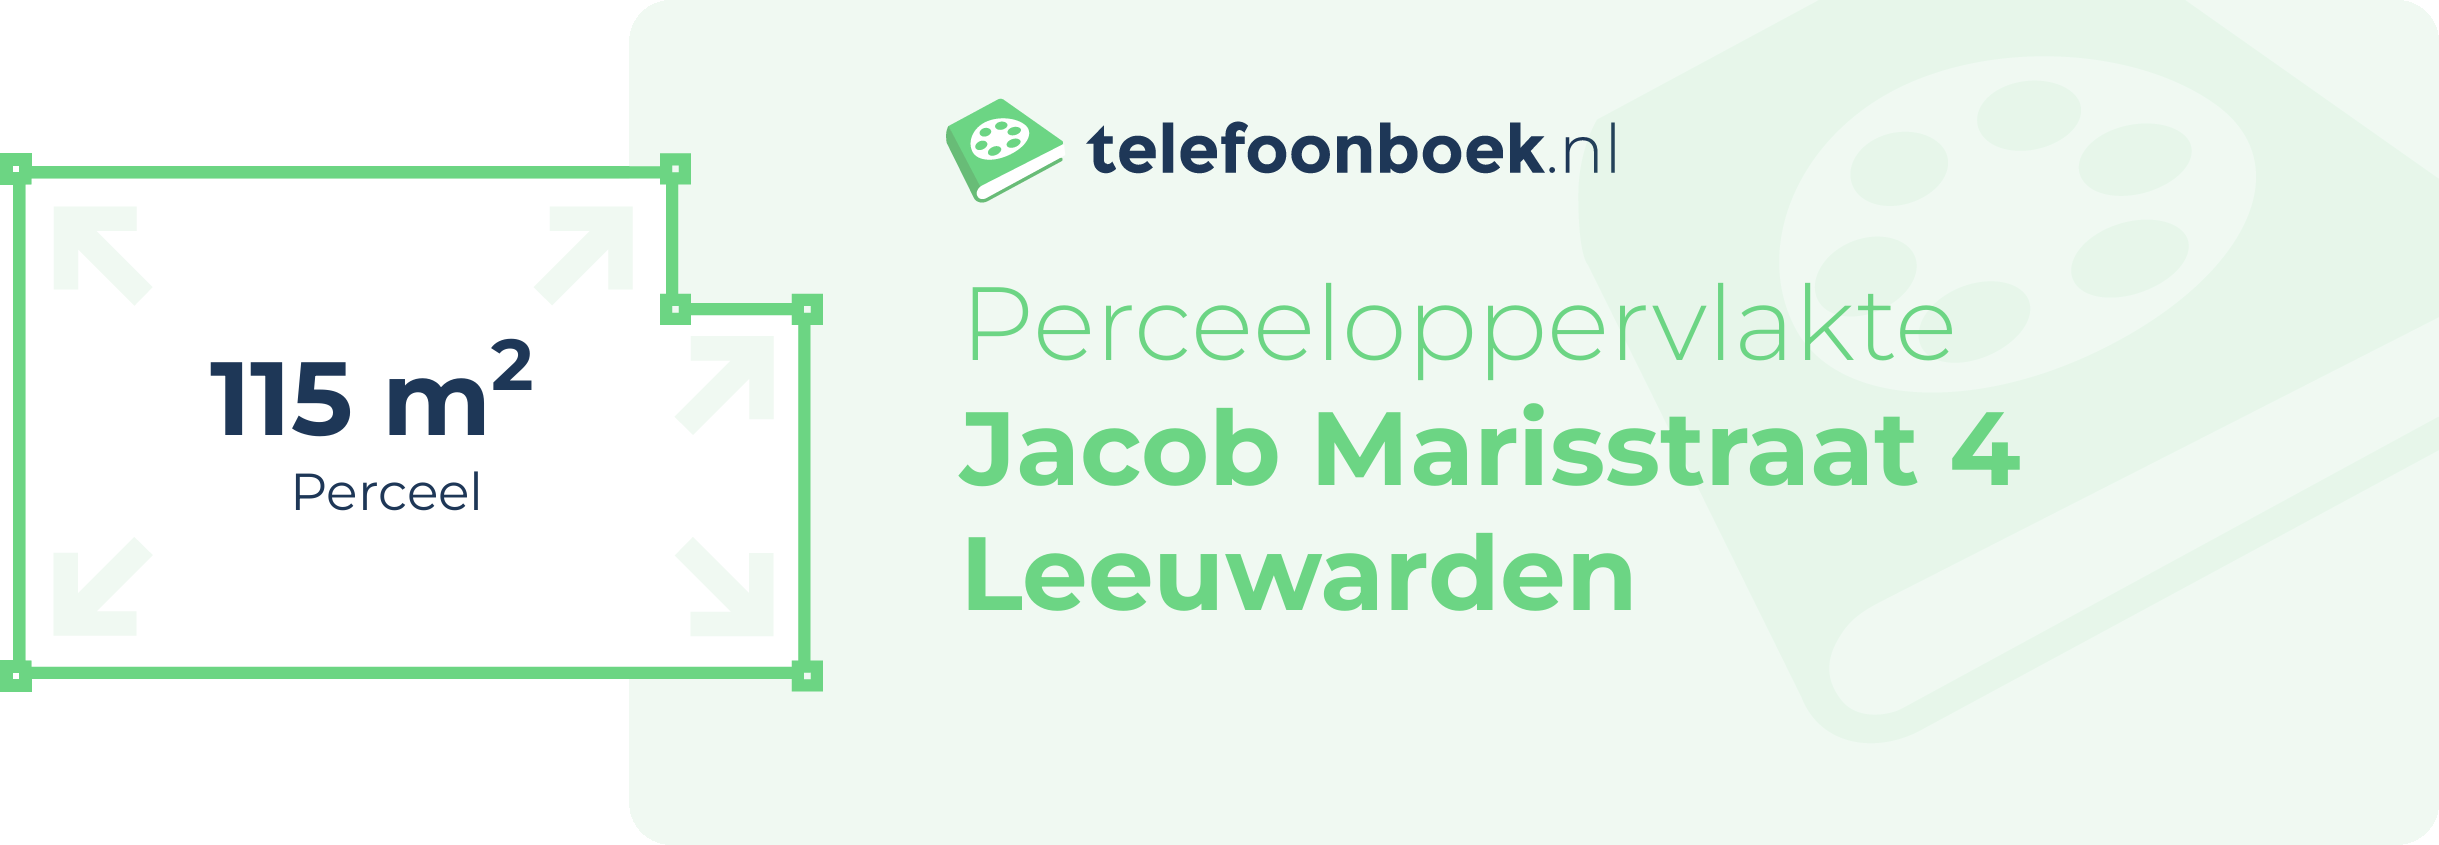 Perceeloppervlakte Jacob Marisstraat 4 Leeuwarden